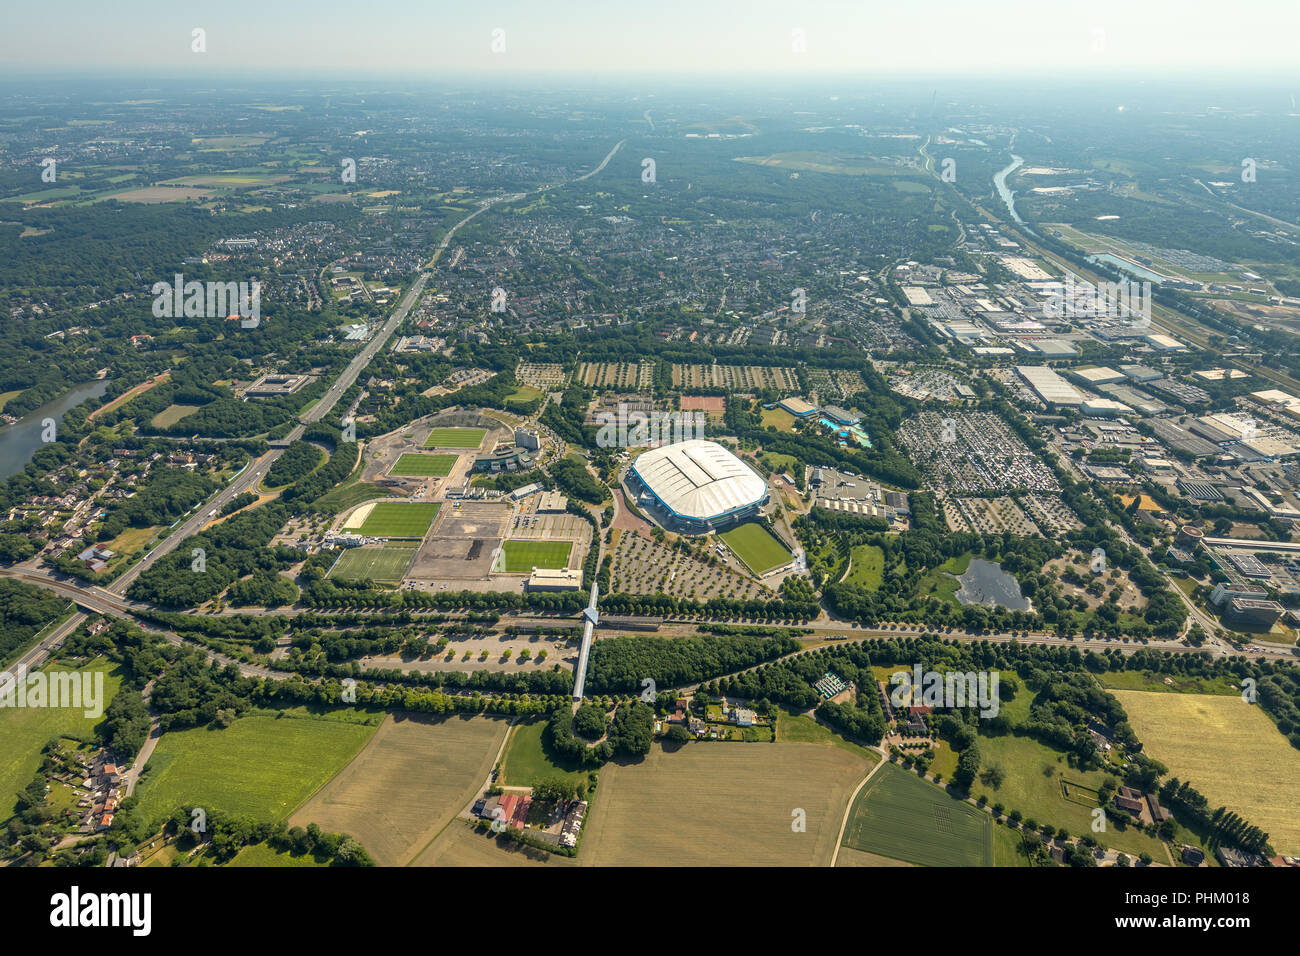 Vista aerea, Parco Arena Gelsenkirchen, Veltins-Arena, Arena AufSchalke di Gelsenkirchen è lo stadio di calcio tedesco del club di calcio FC Schalke 04, Foto Stock